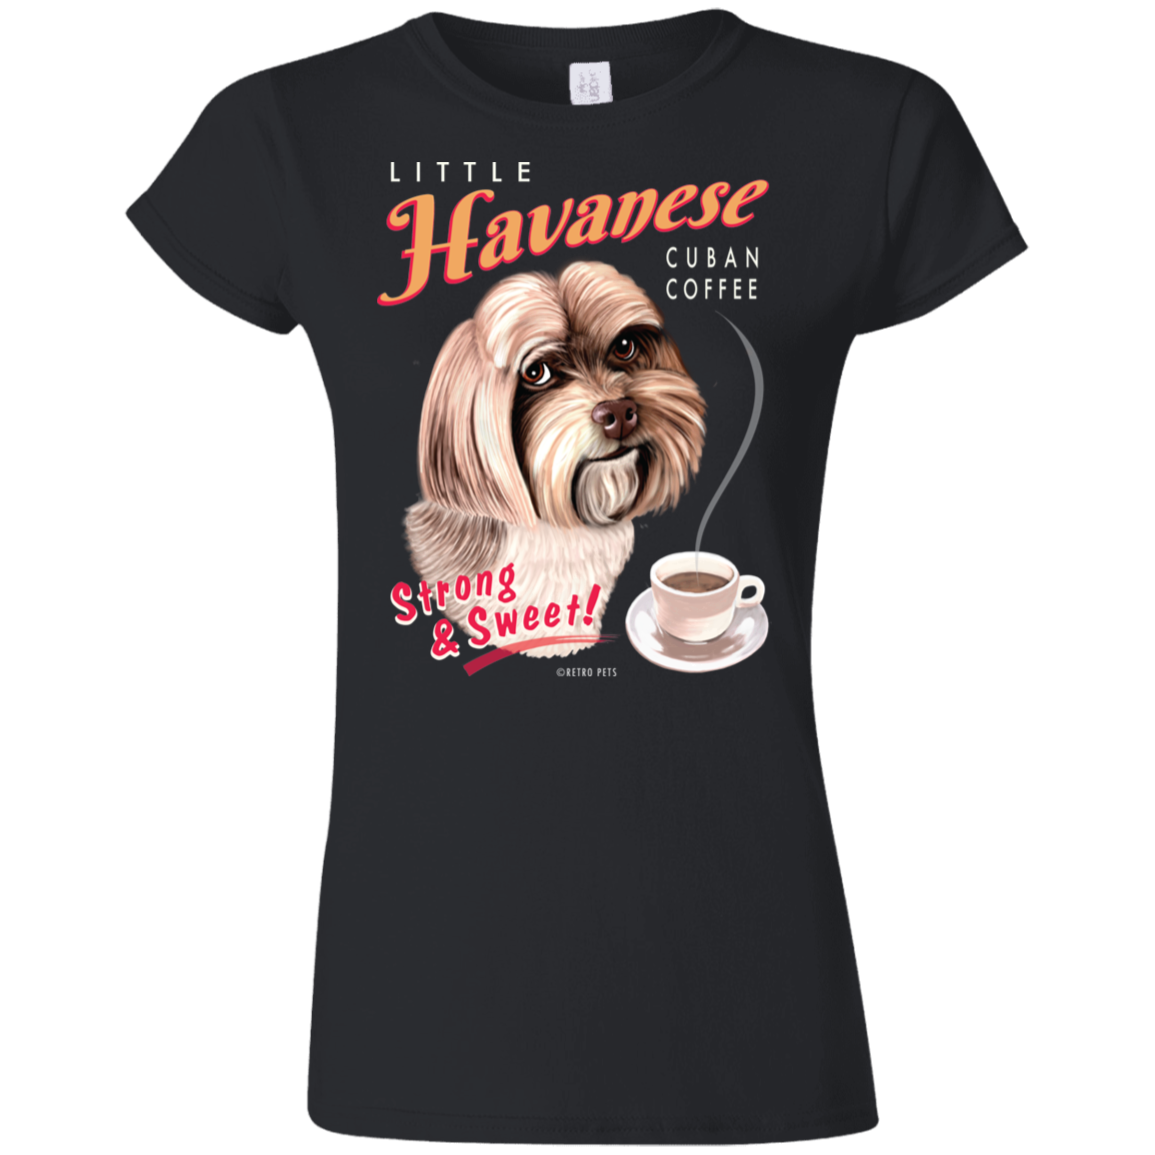 Little Havanese "Cuban Coffee" Soft-style Ladies' T-Shirt